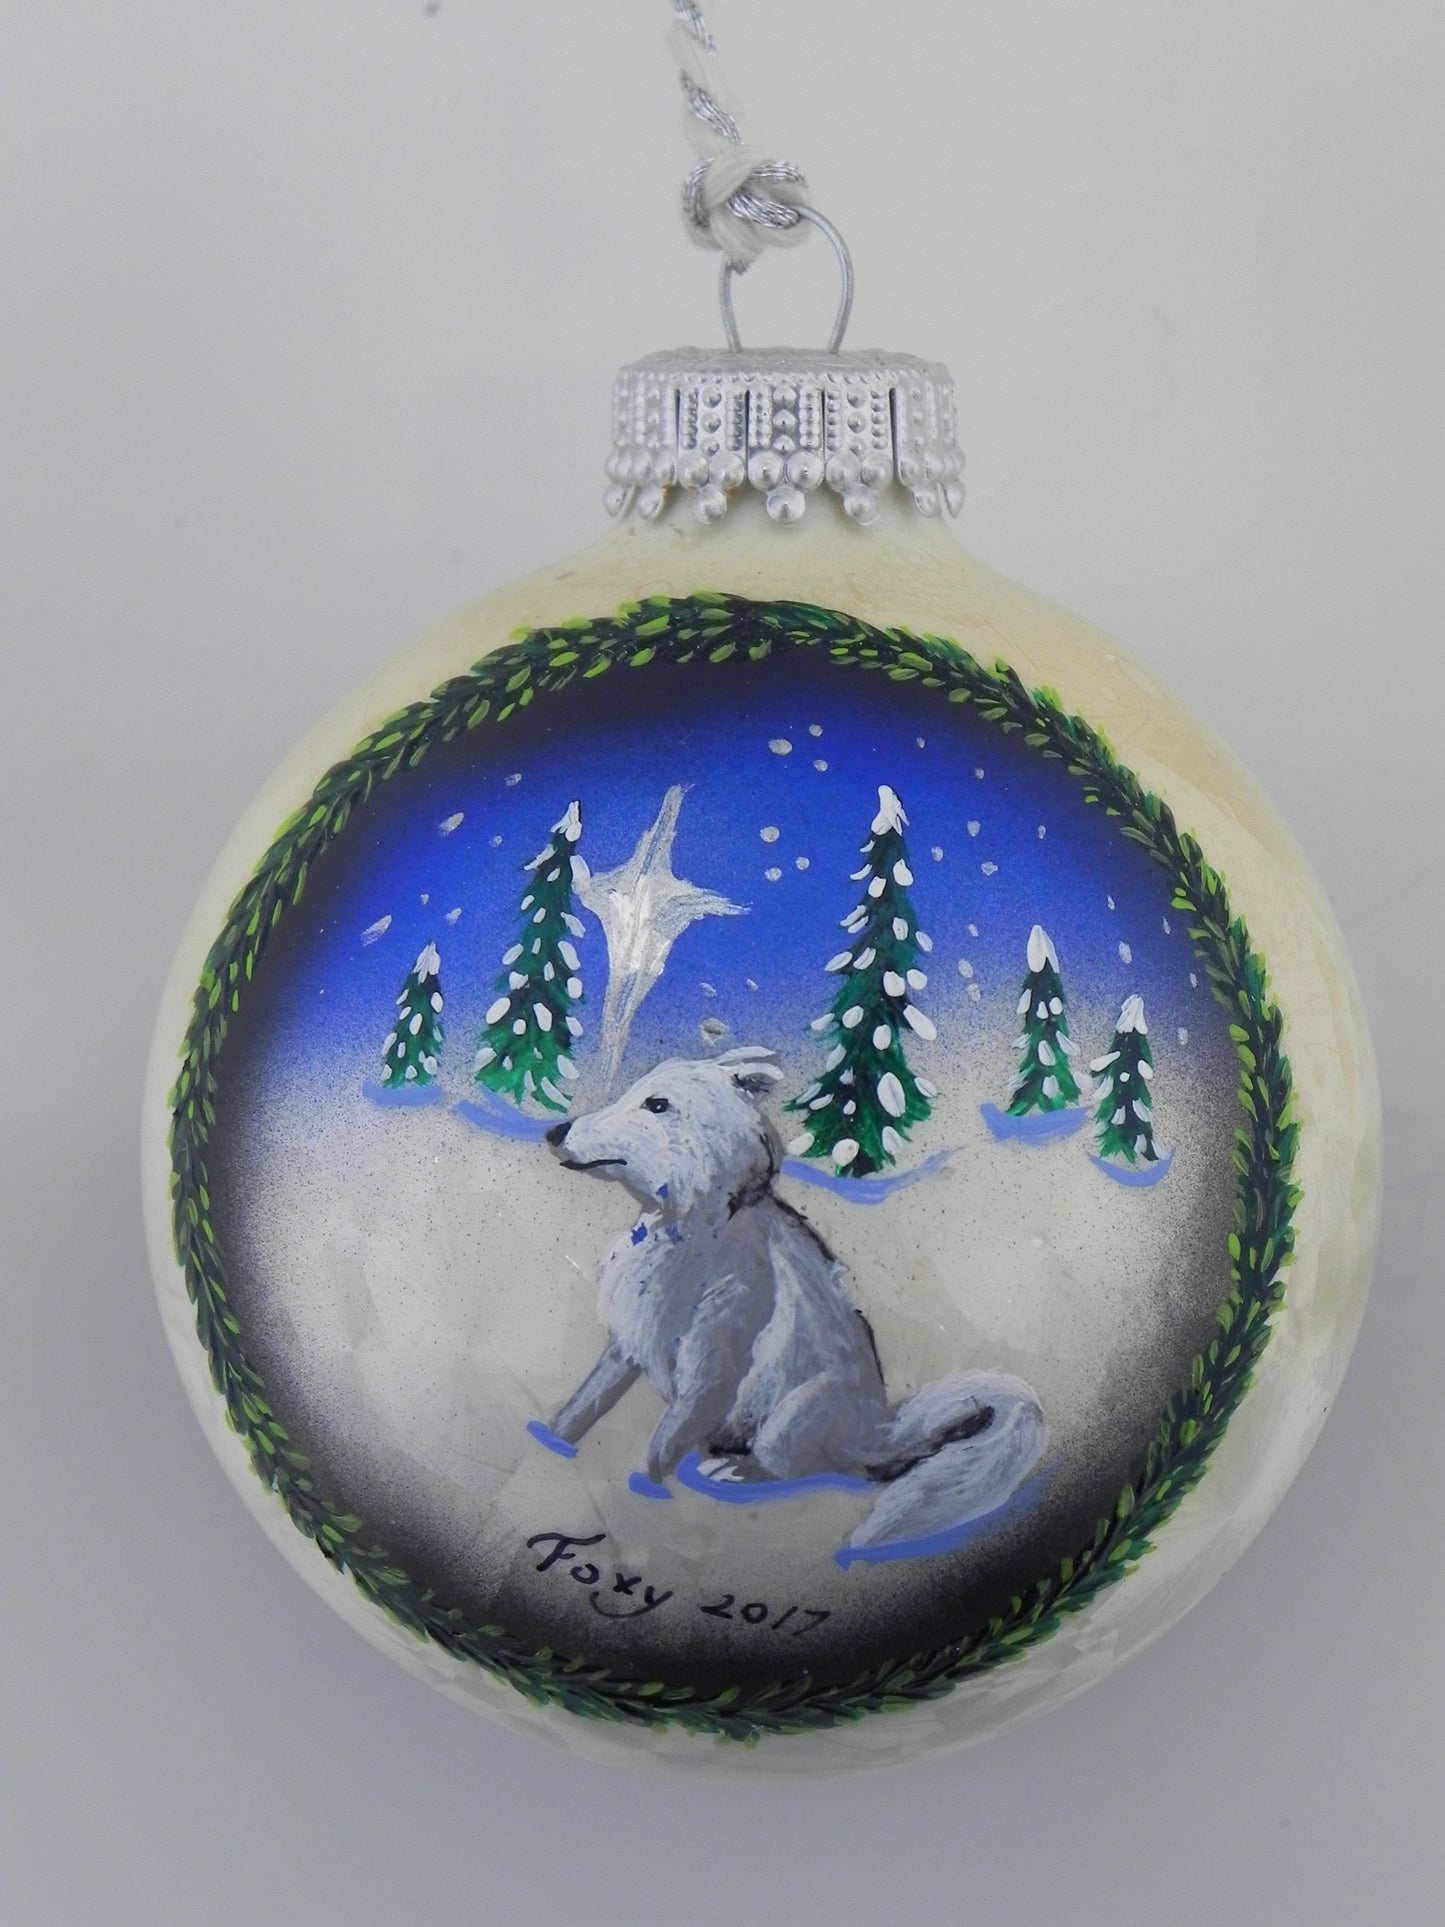 "Four season: Winter Fox" ornament